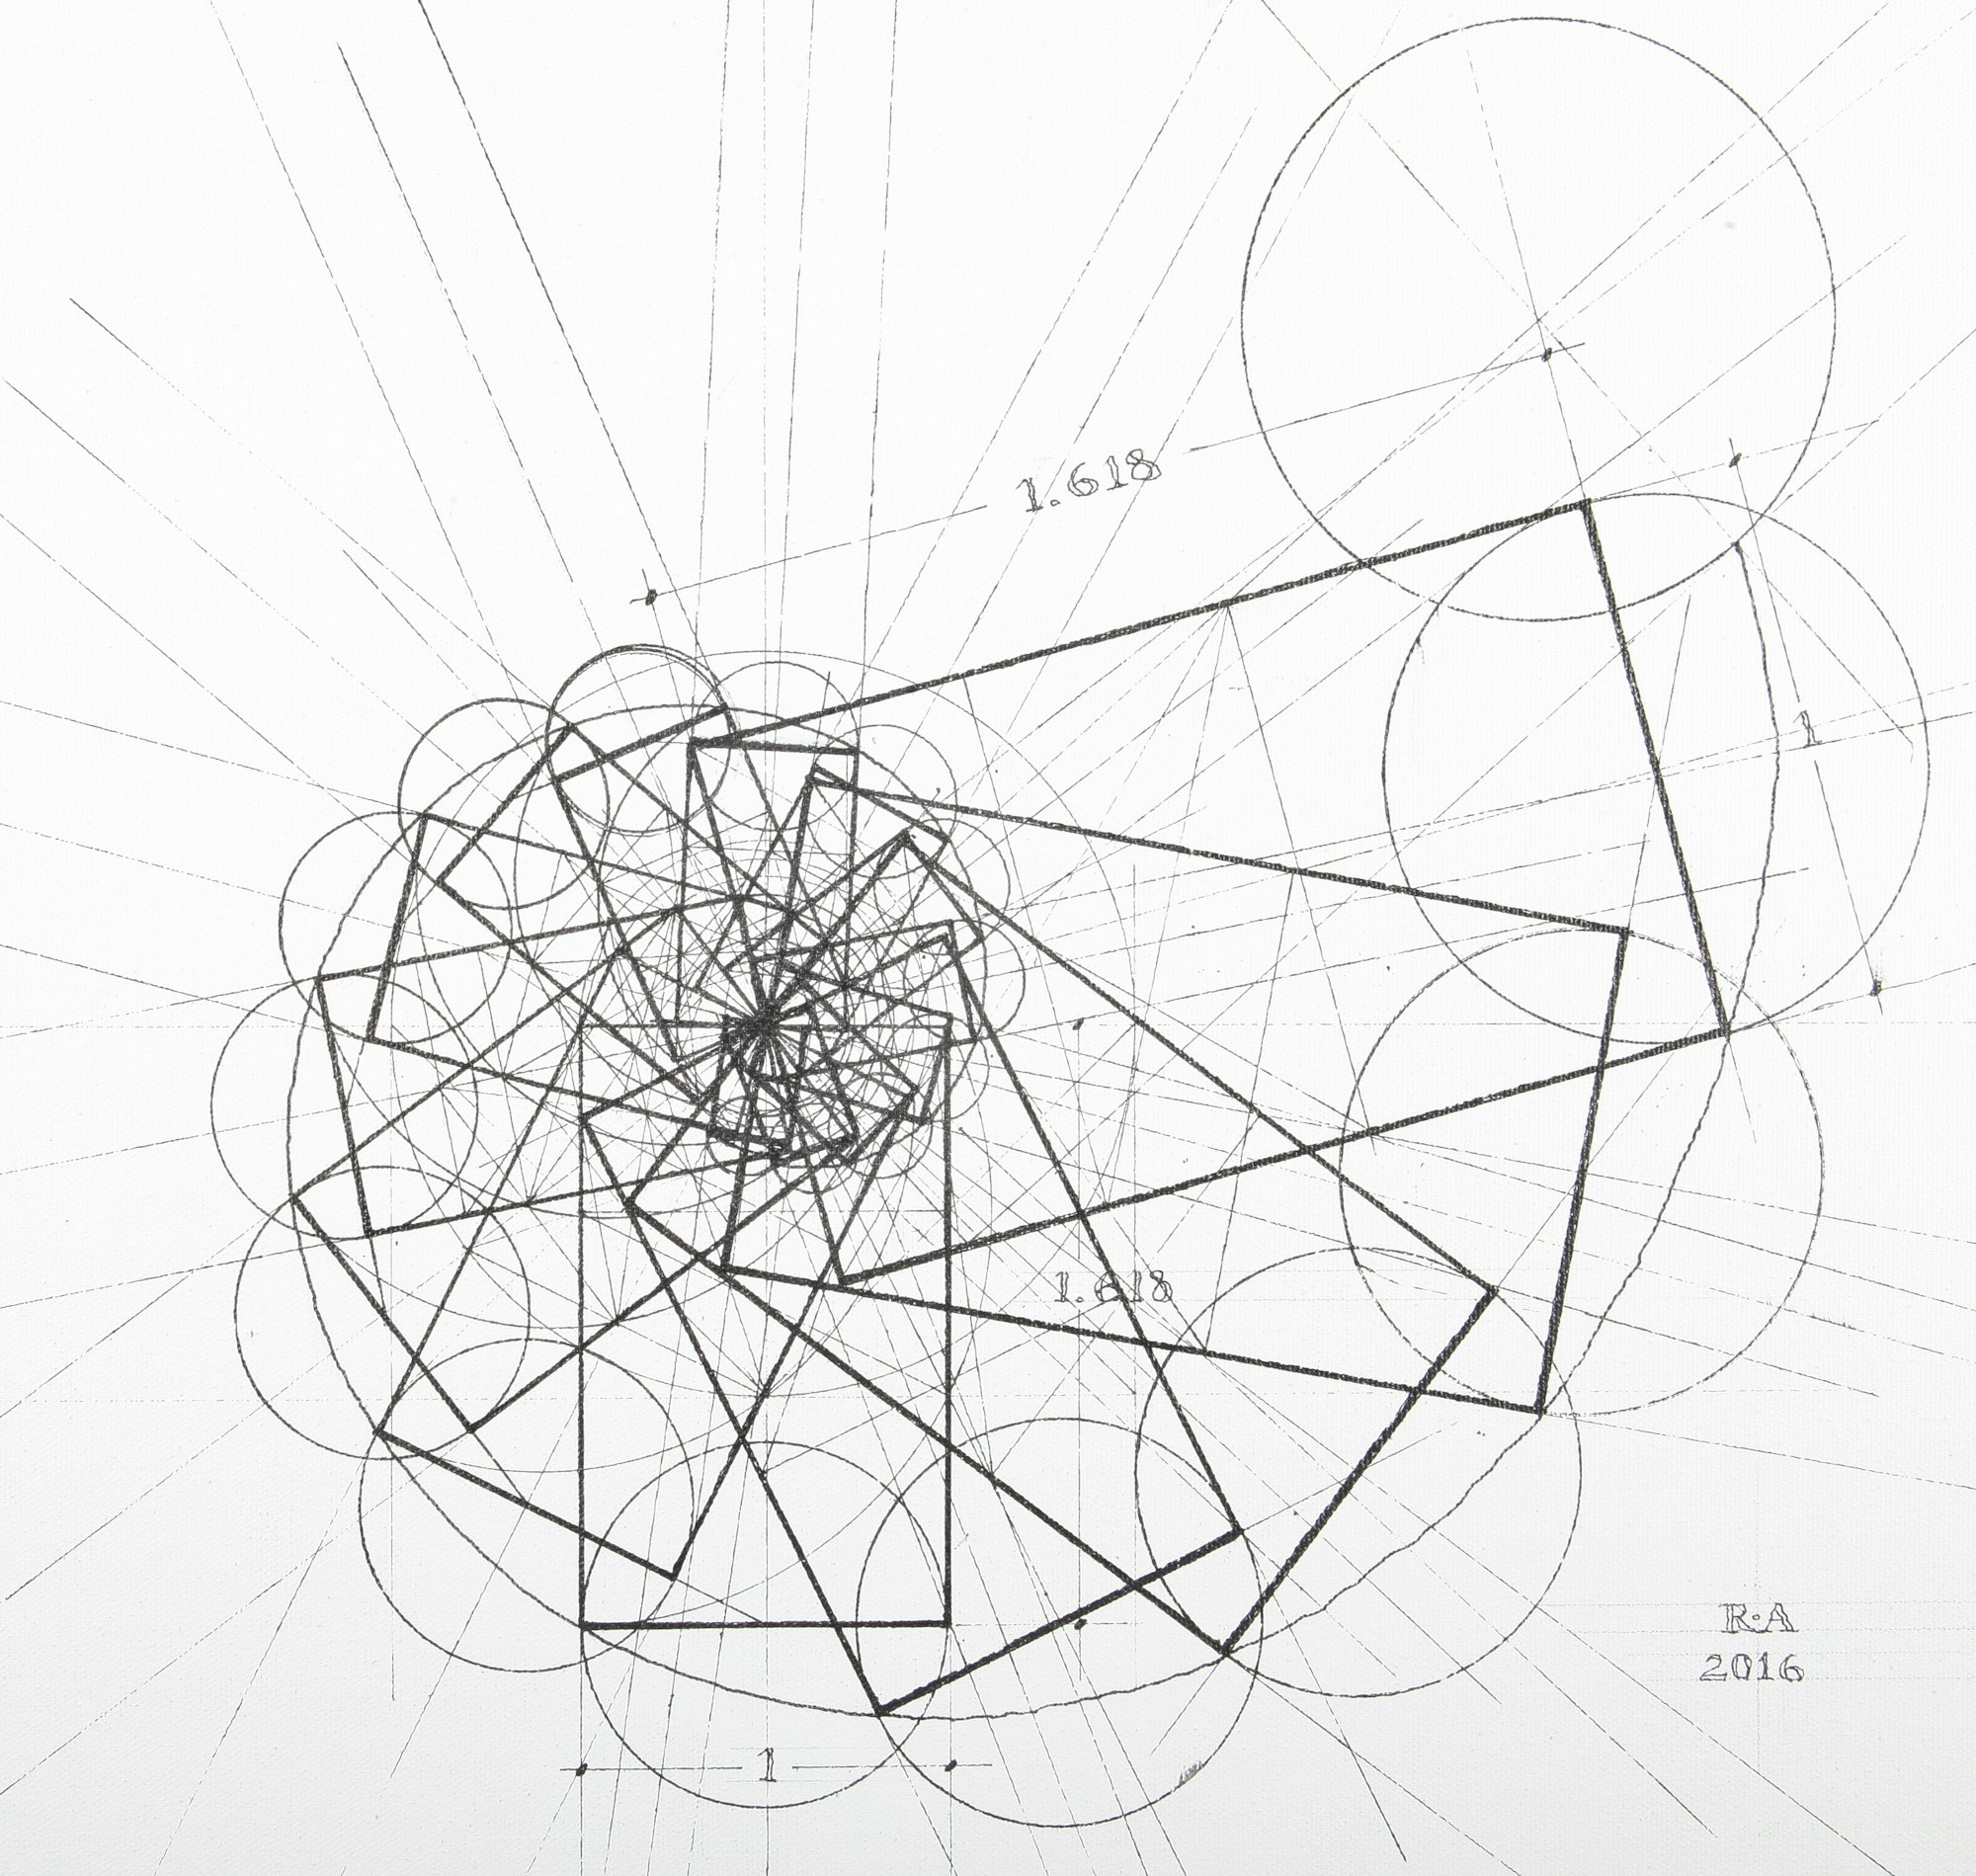 Rafael Araujo Draws Perfect Illustrations by Hand Using Math's Golden Ratio